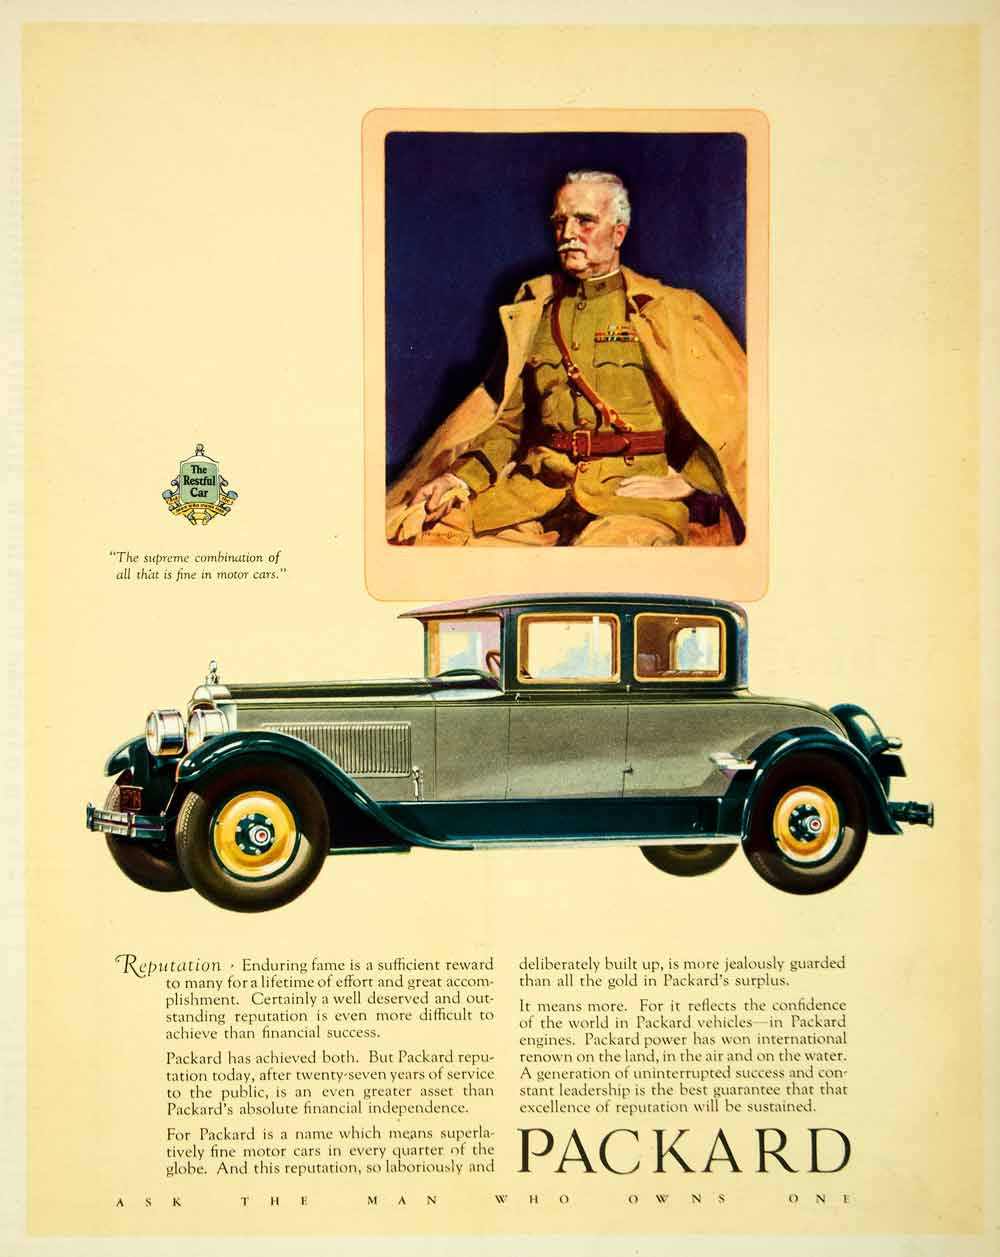 1927 Ad Antique Enclosed Packard Automobile Car Military Uniform Portrait SCA5 - Period Paper
